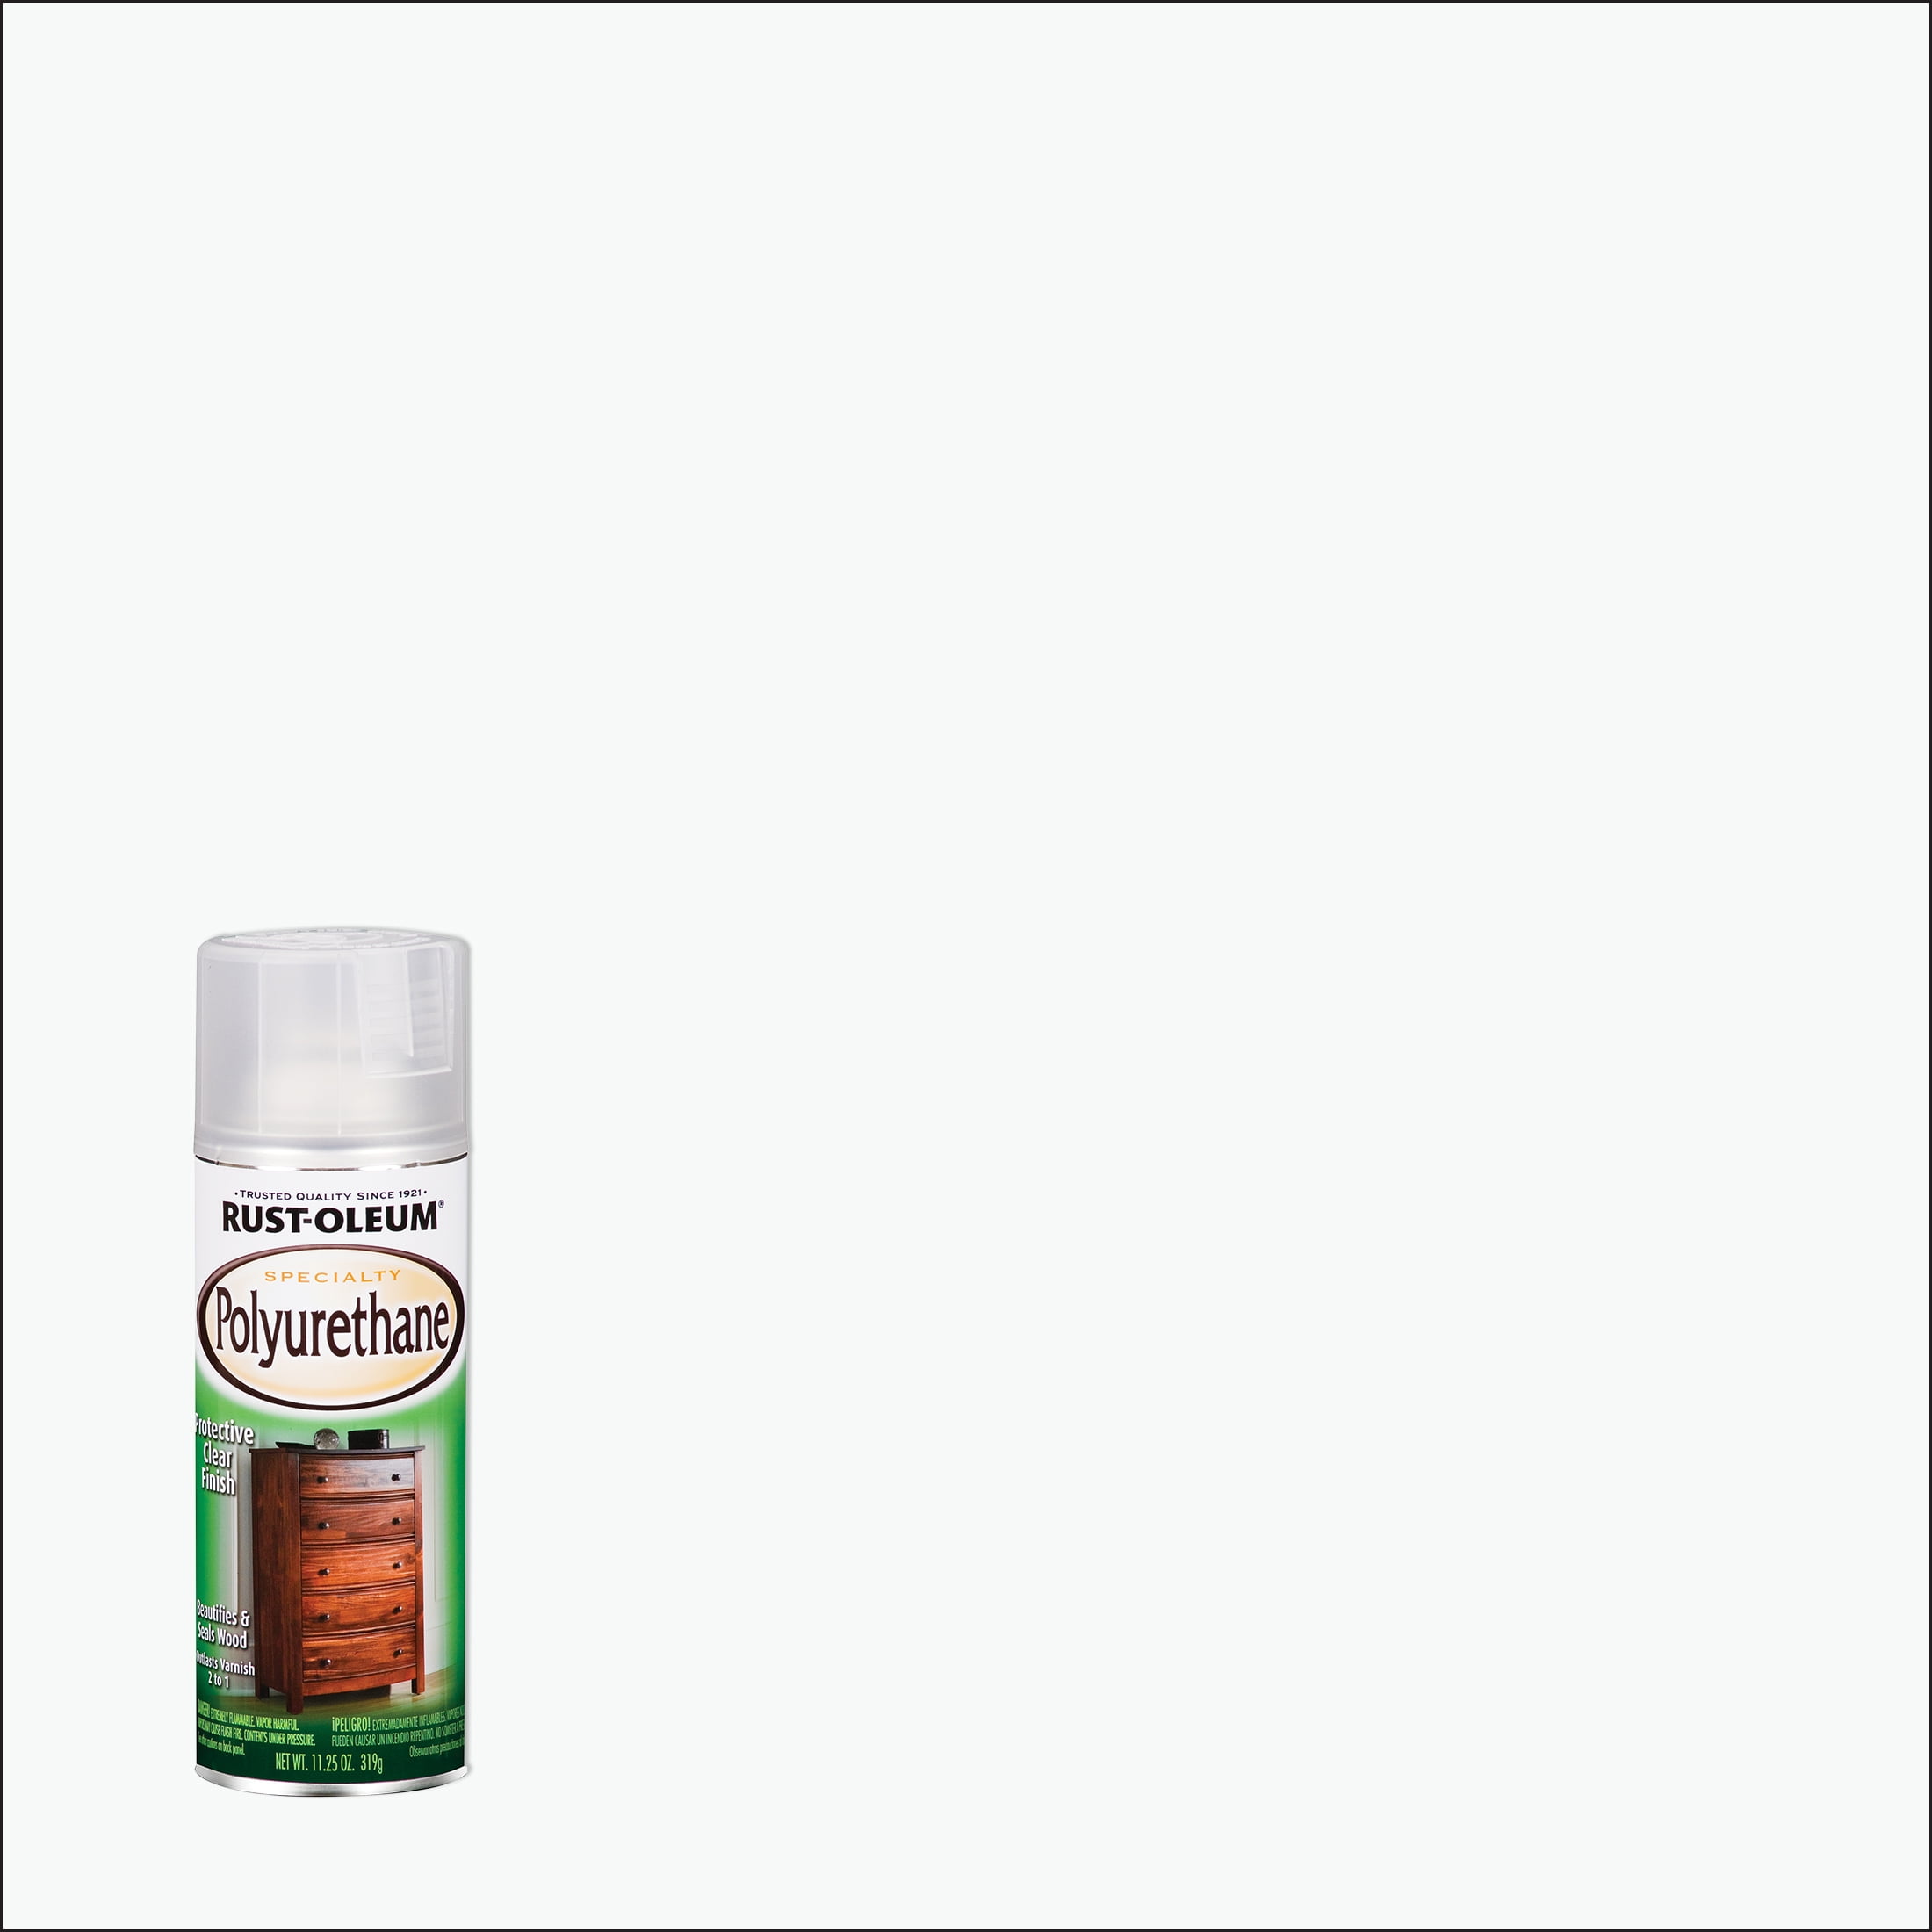 Rust-Oleum Specialty Gloss Clear Water-Based Polyurethane Spray